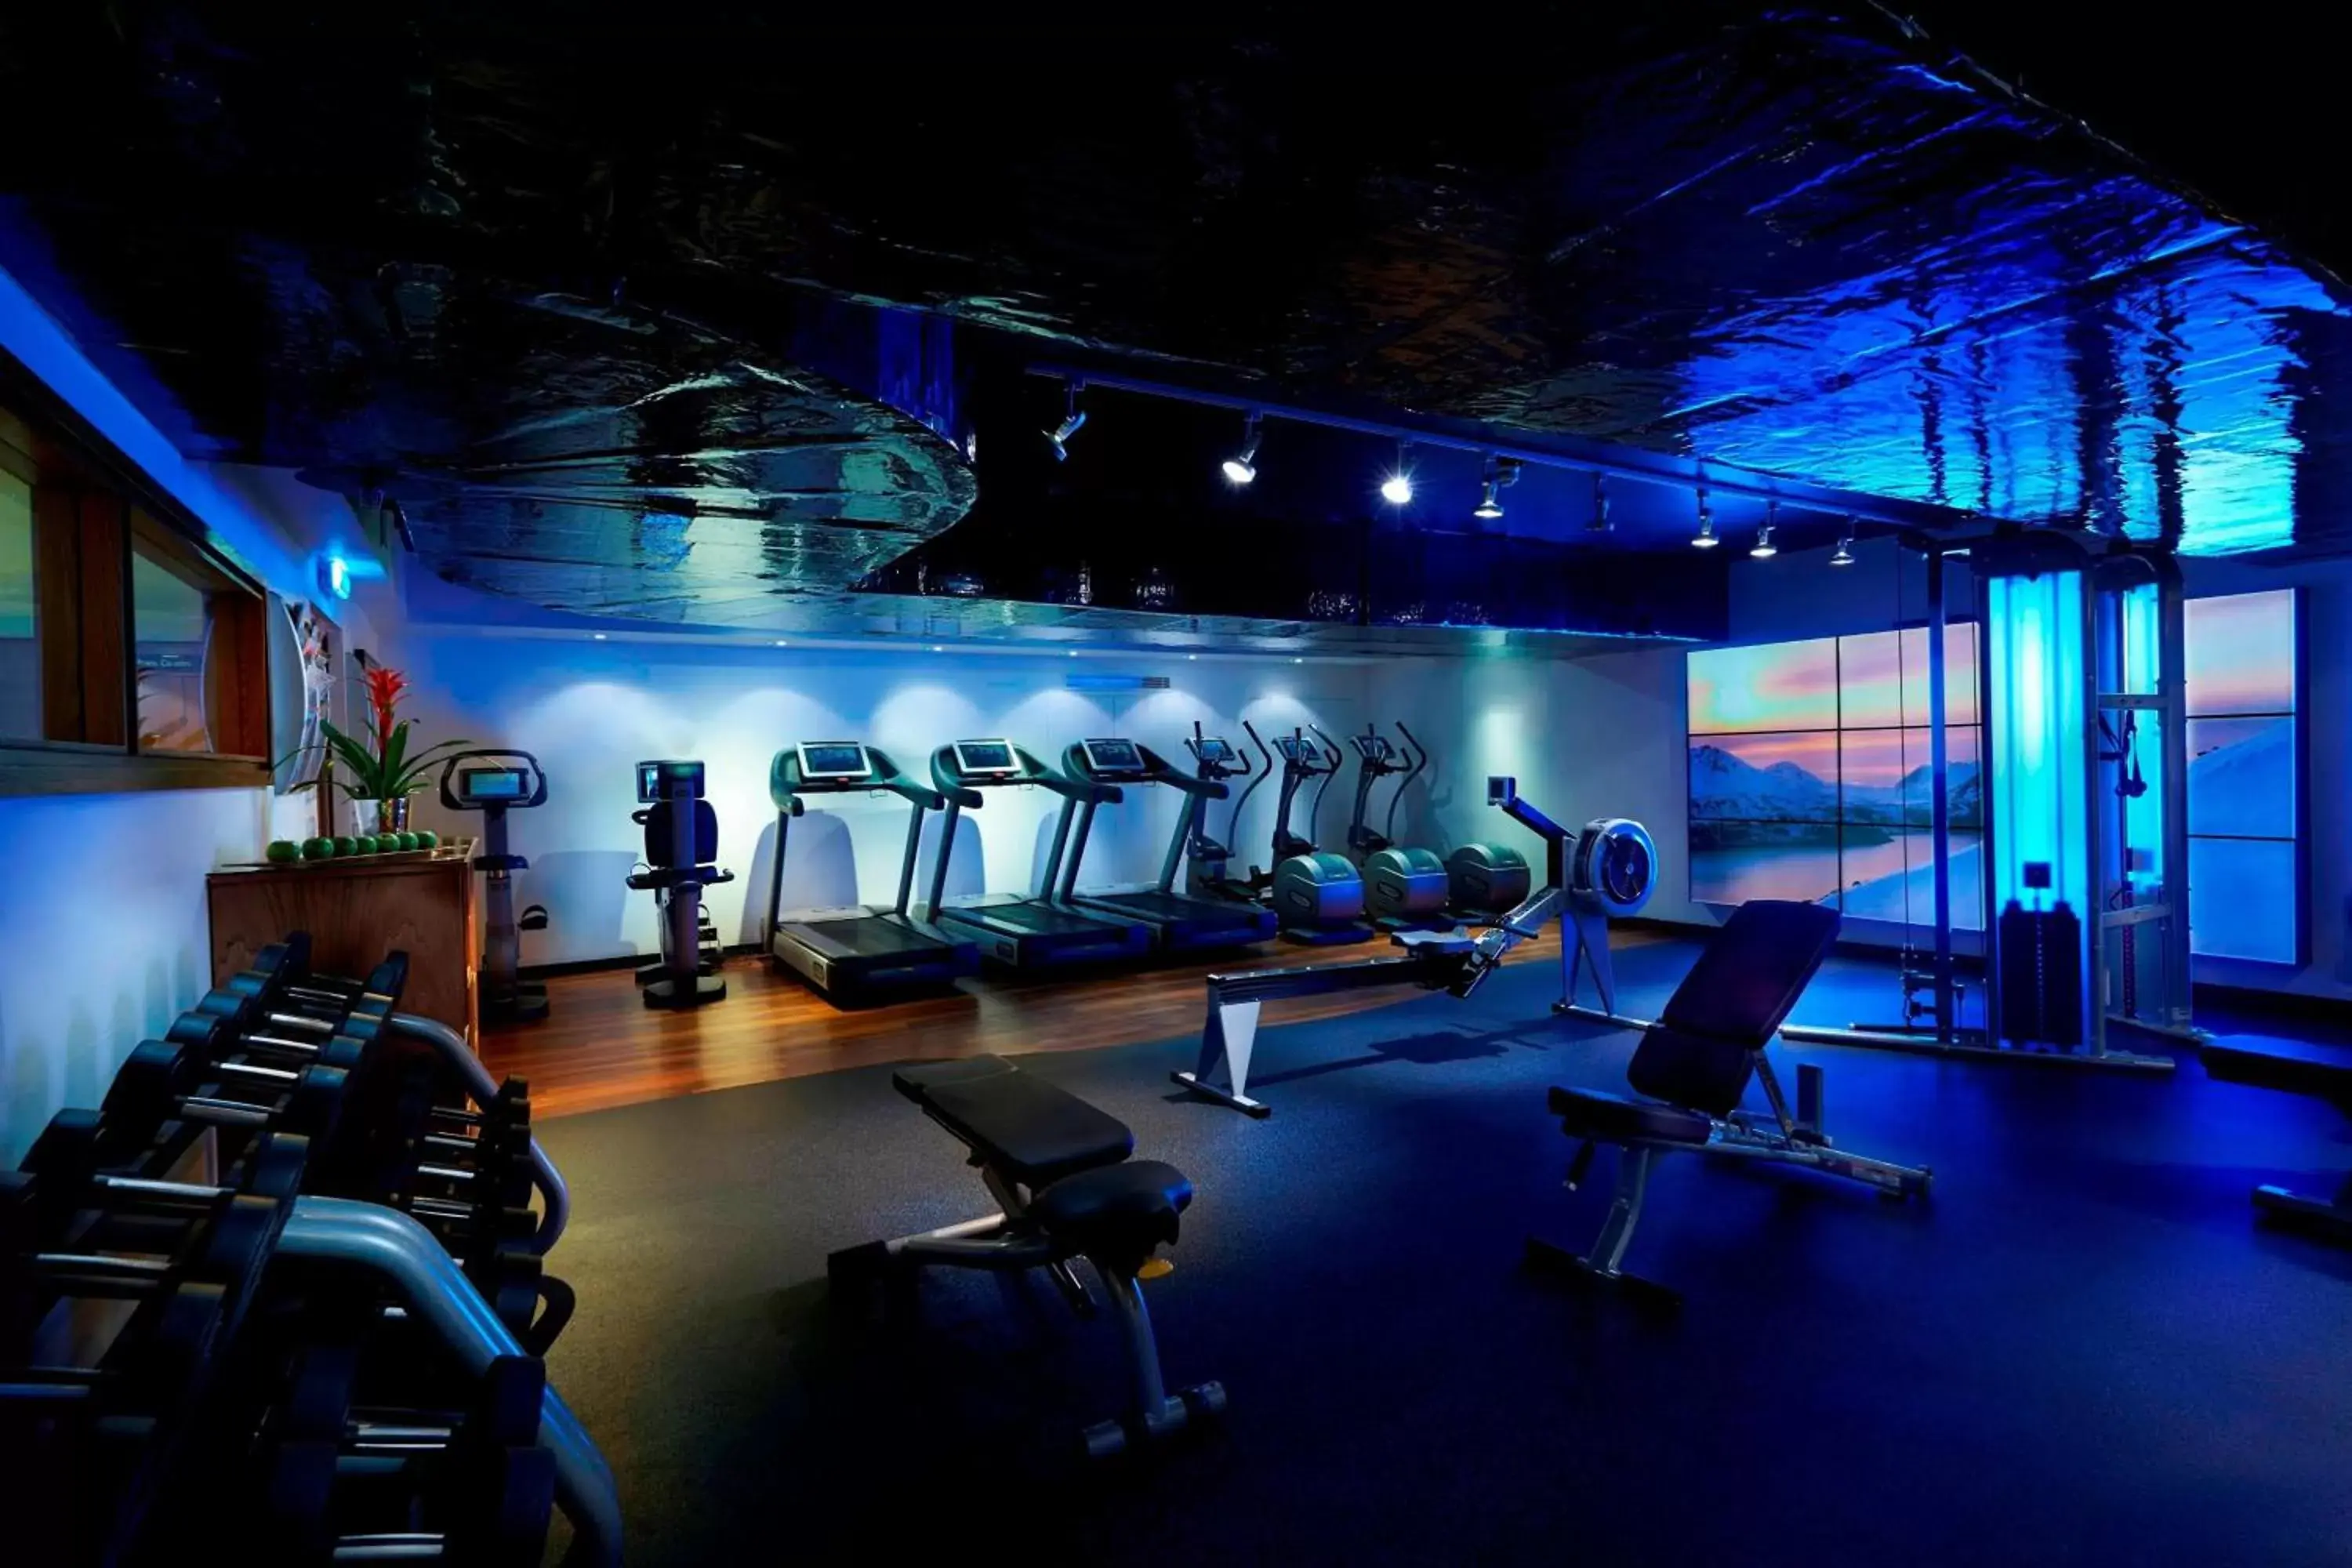 Fitness centre/facilities, Fitness Center/Facilities in London Marriott Hotel Grosvenor Square